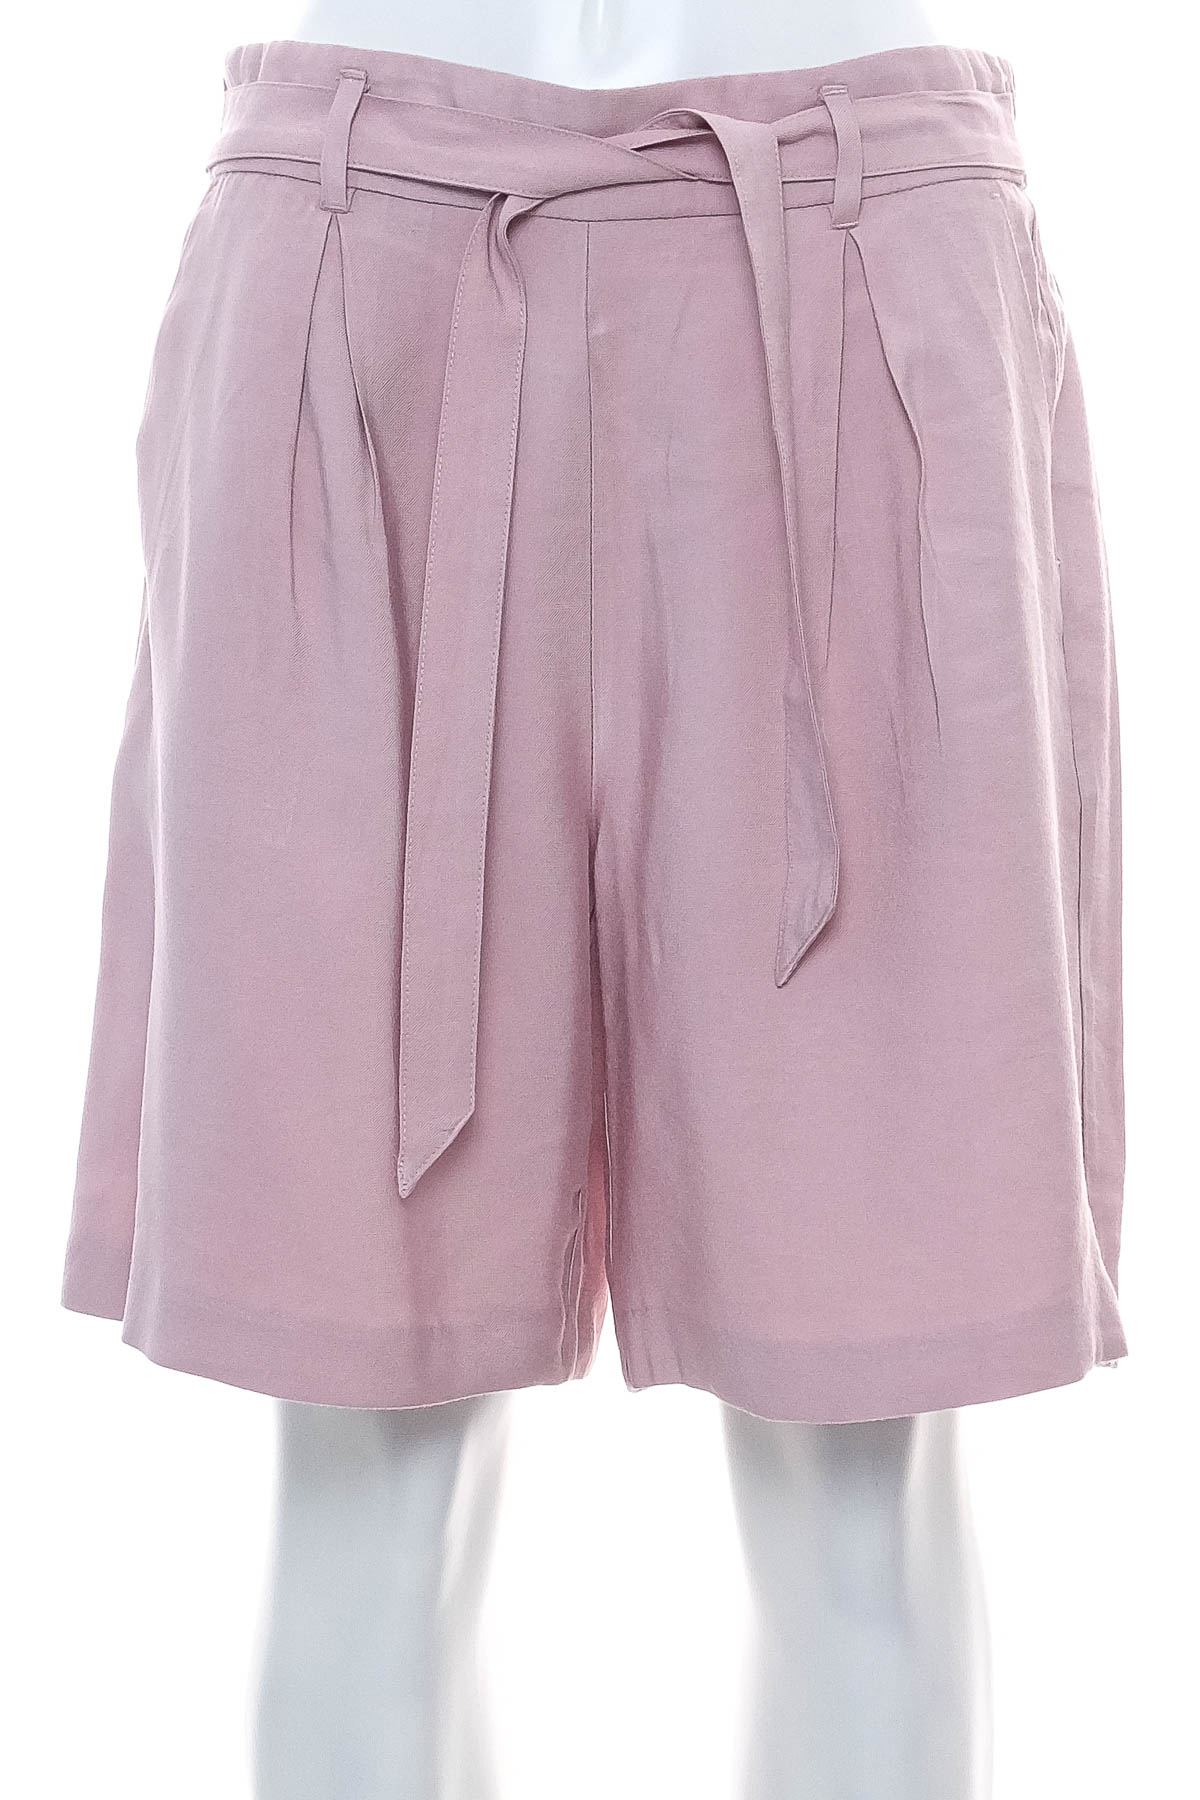 Female shorts - Laura Torelli - 0